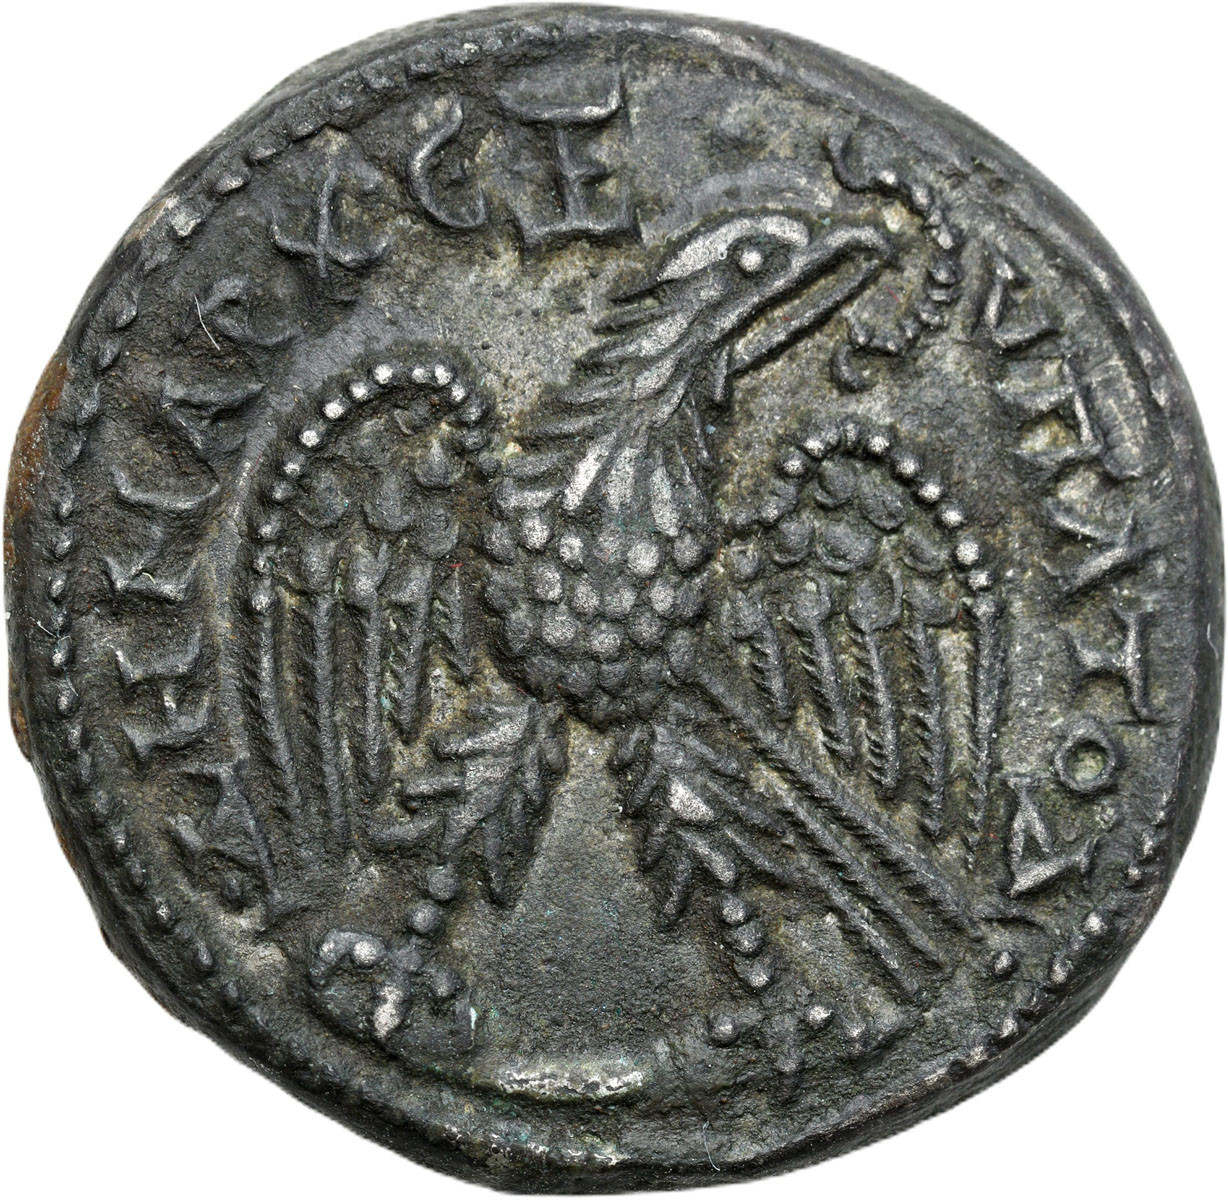 Prowincje Rzymskie, Syria, Tetradrachma, Caracalla 196 - 217 n. e., Antiochia nad Orontesem